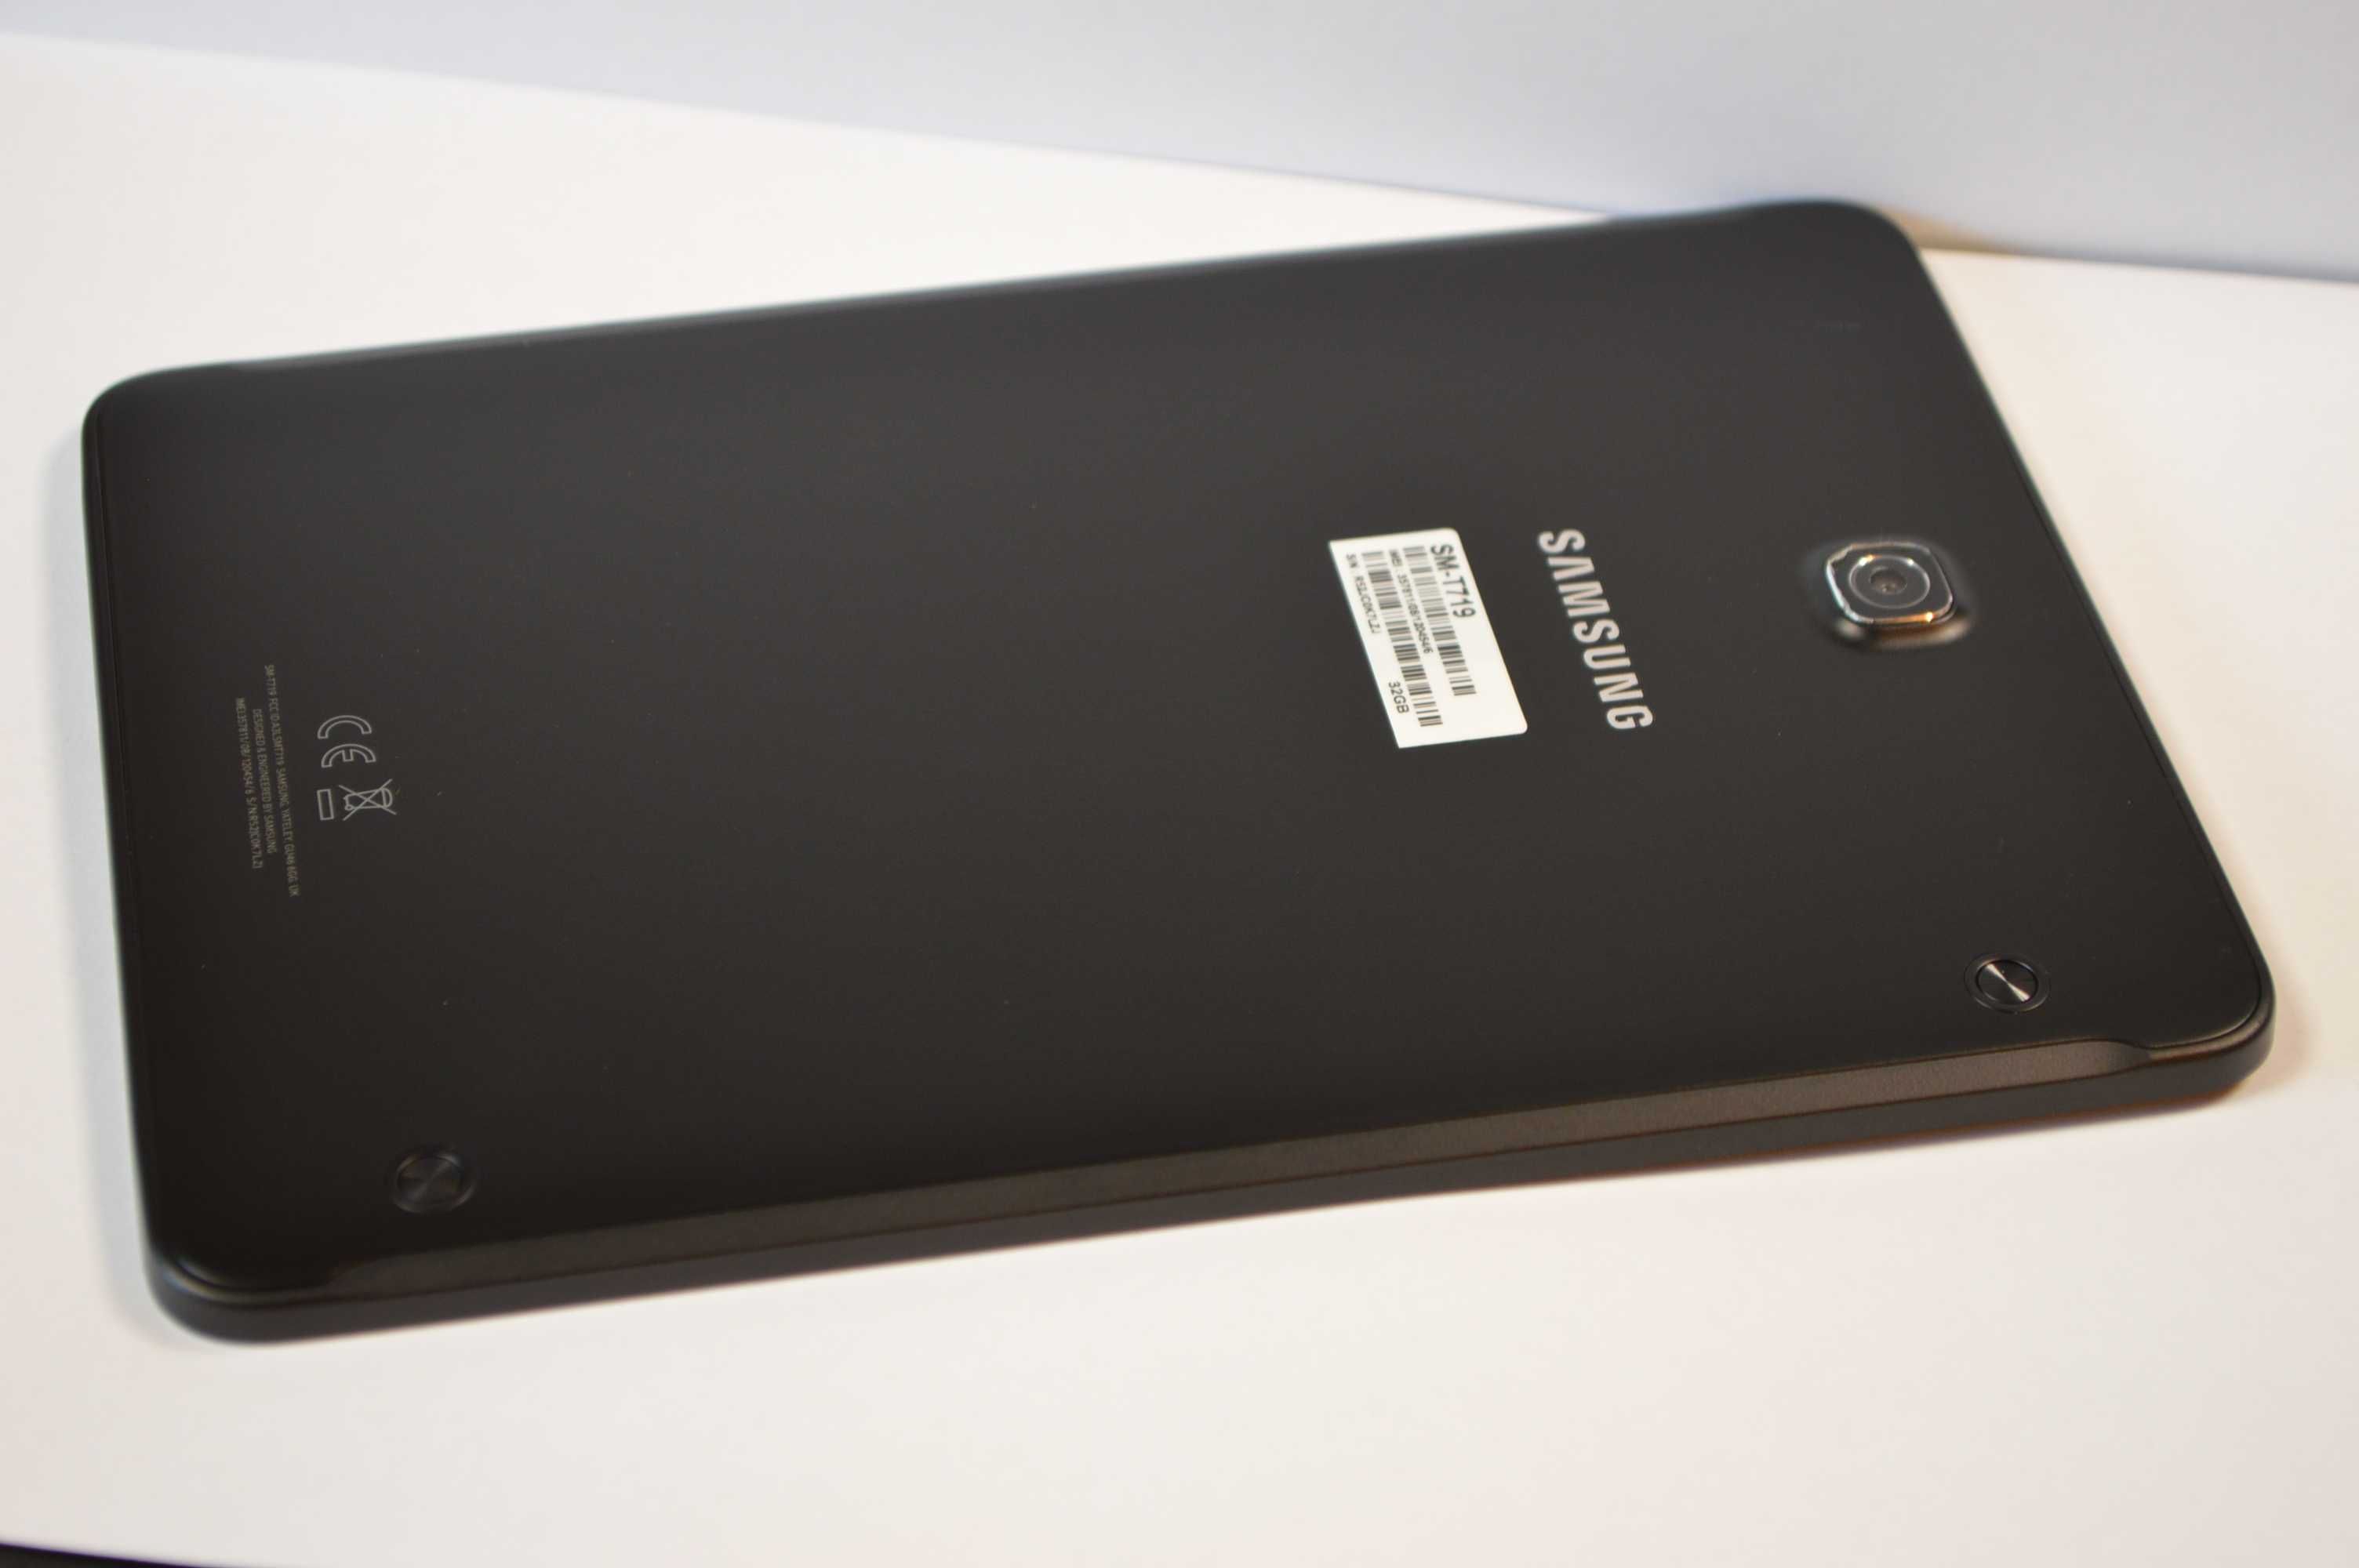 Планшет Samsung Galaxy Tab S2 8.0 SM-T719 LTE 32Gb Black